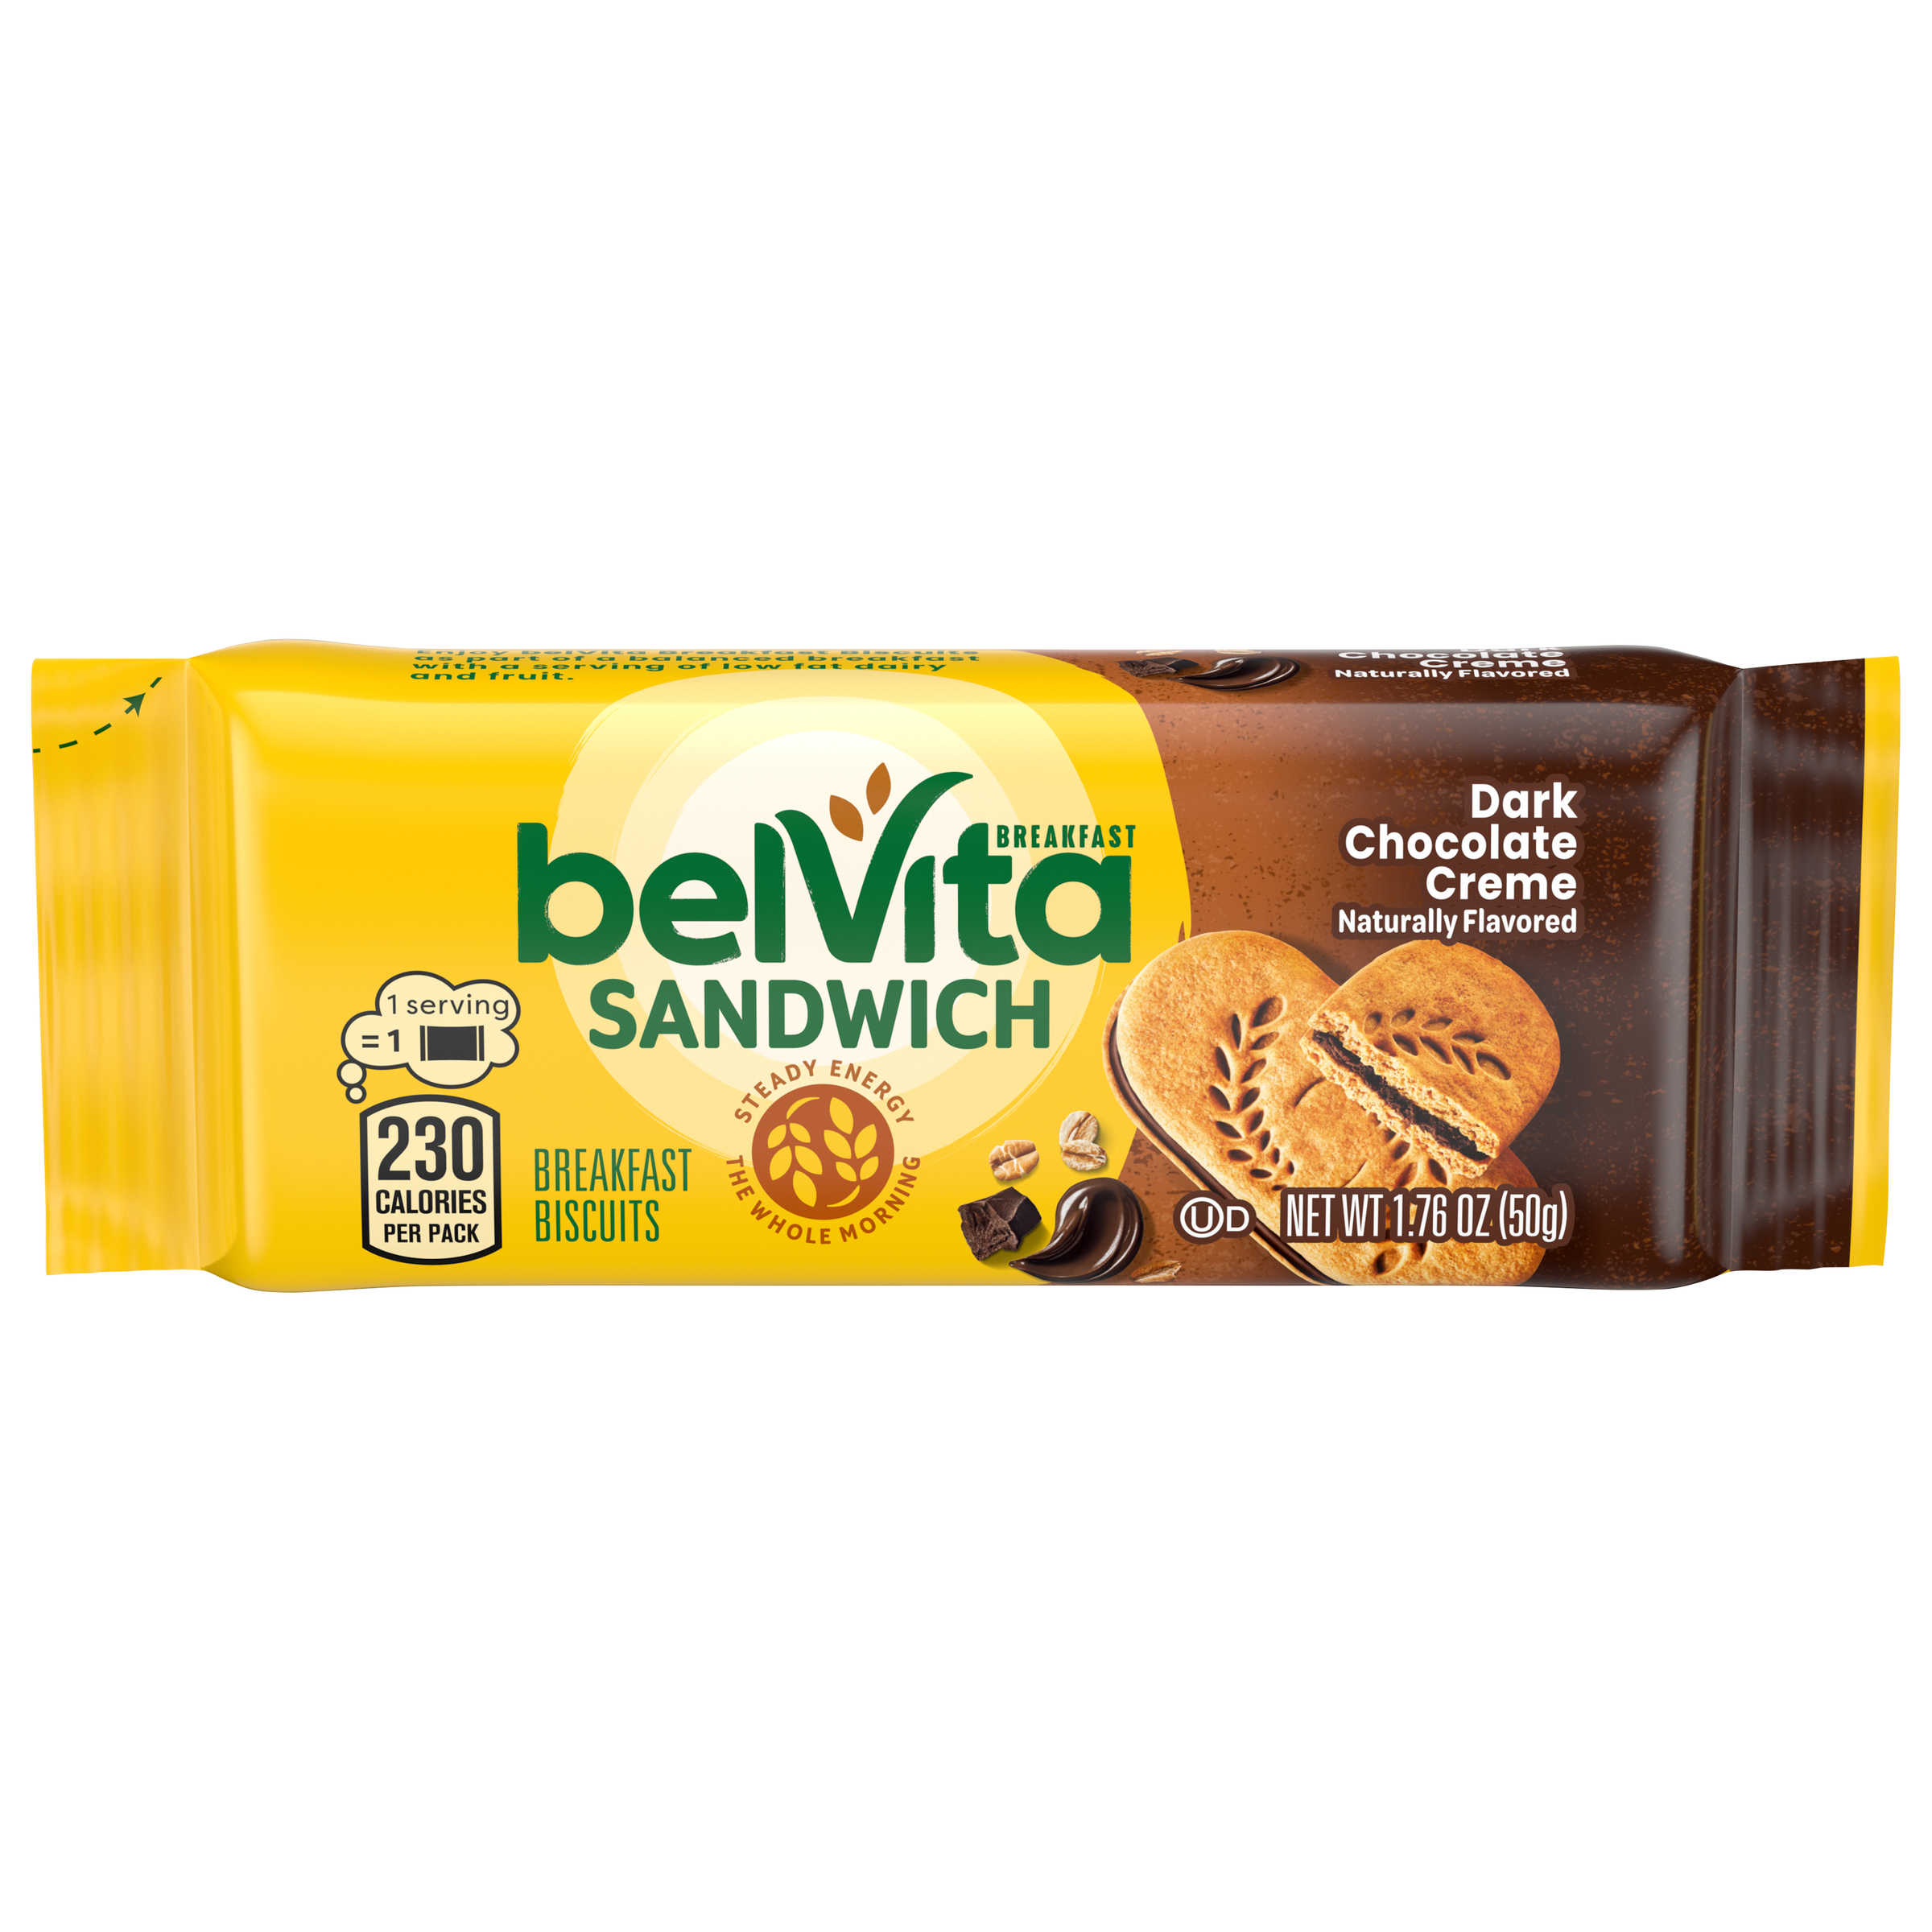 belVita Sandwich Dark Chocolate Creme 1.76 oz